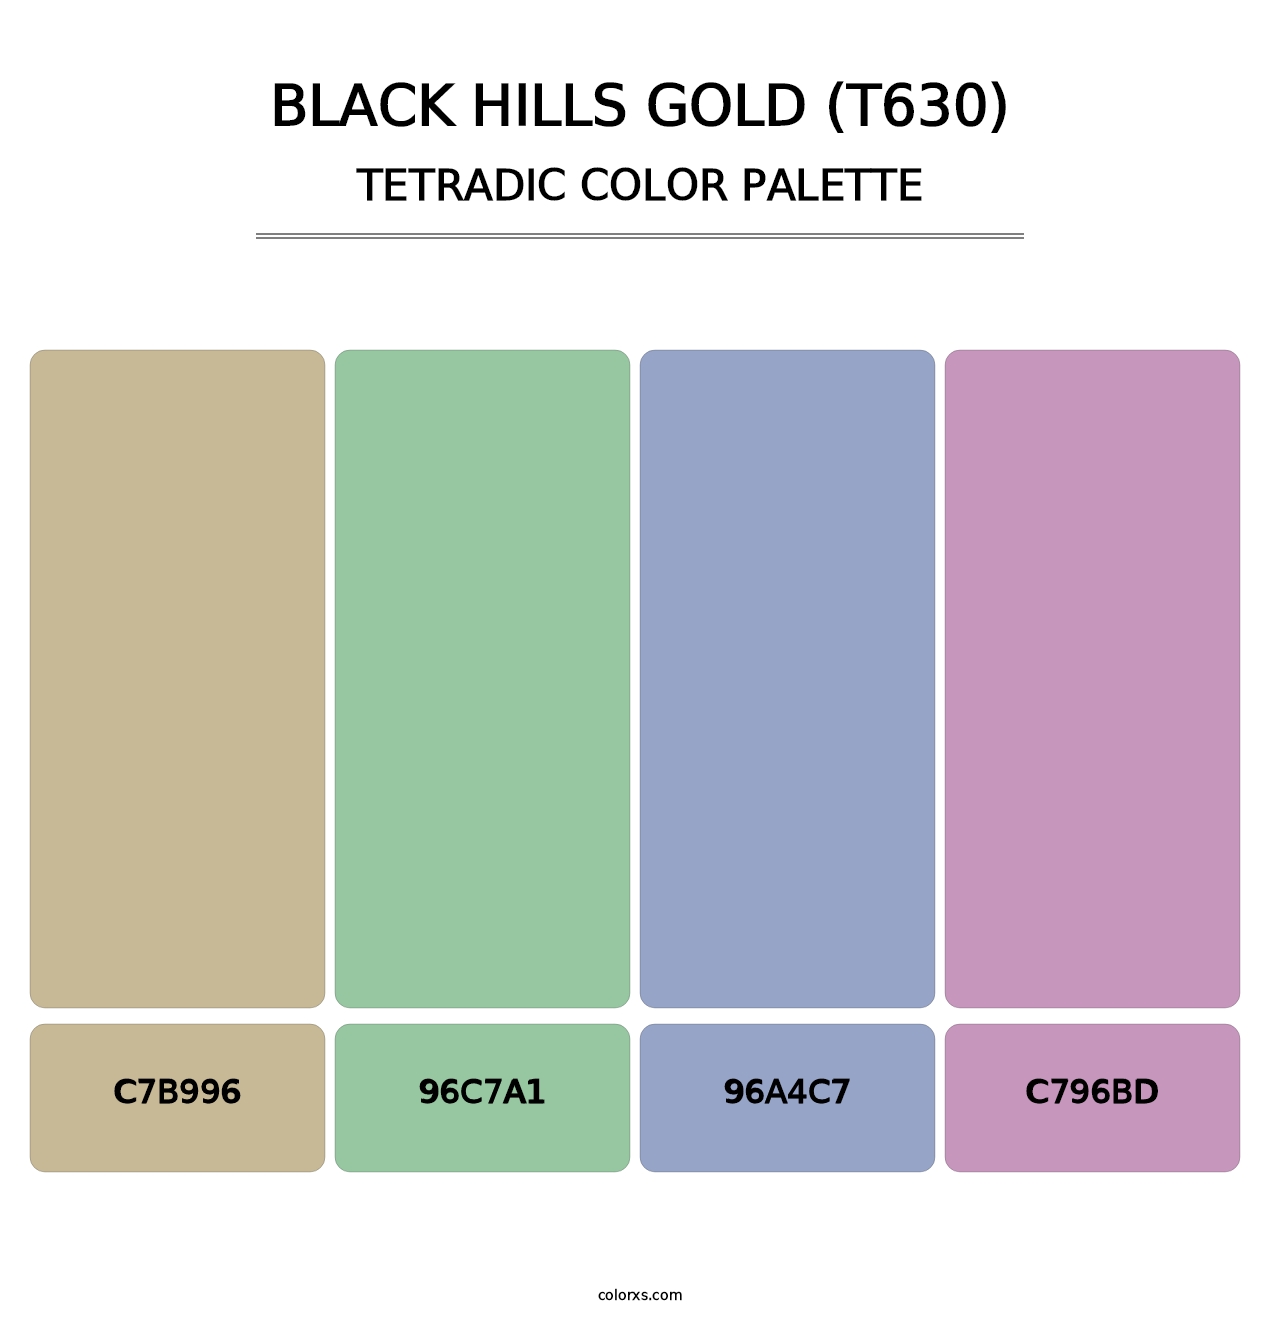 Black Hills Gold (T630) - Tetradic Color Palette